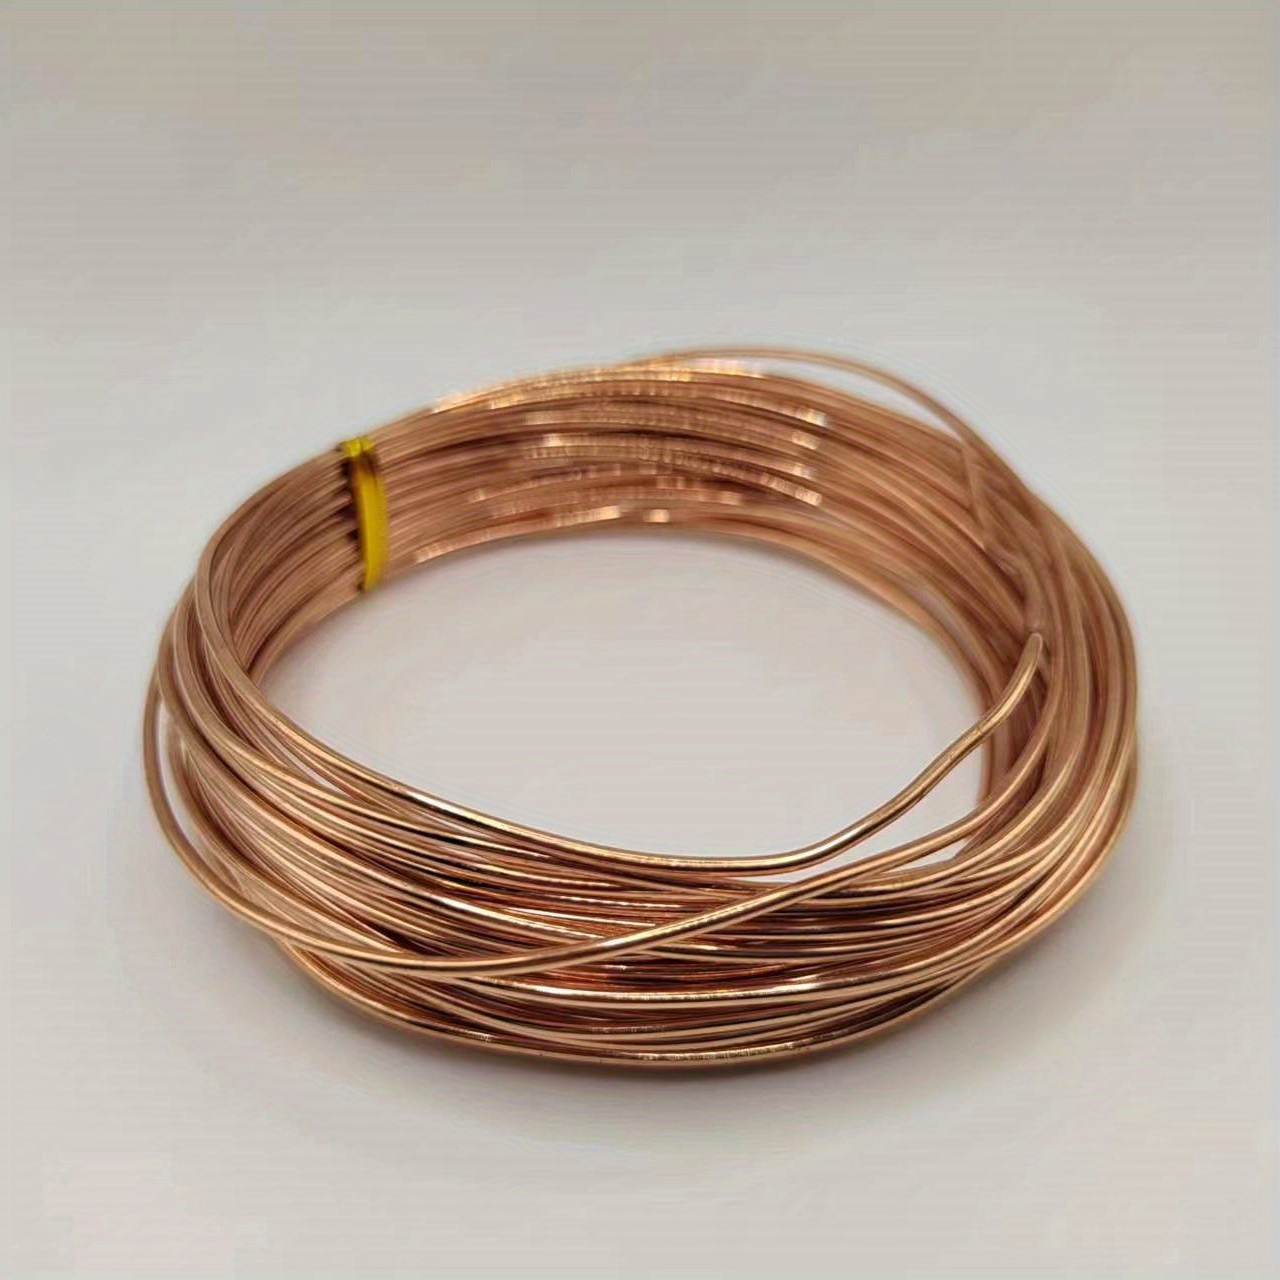 Uxcell 99.9% Soft Copper Wire, 22 Gauge/0.6mm Diameter 653 Feet/199m 1.1 Pound Spool Pure Copper Wire, Bronze